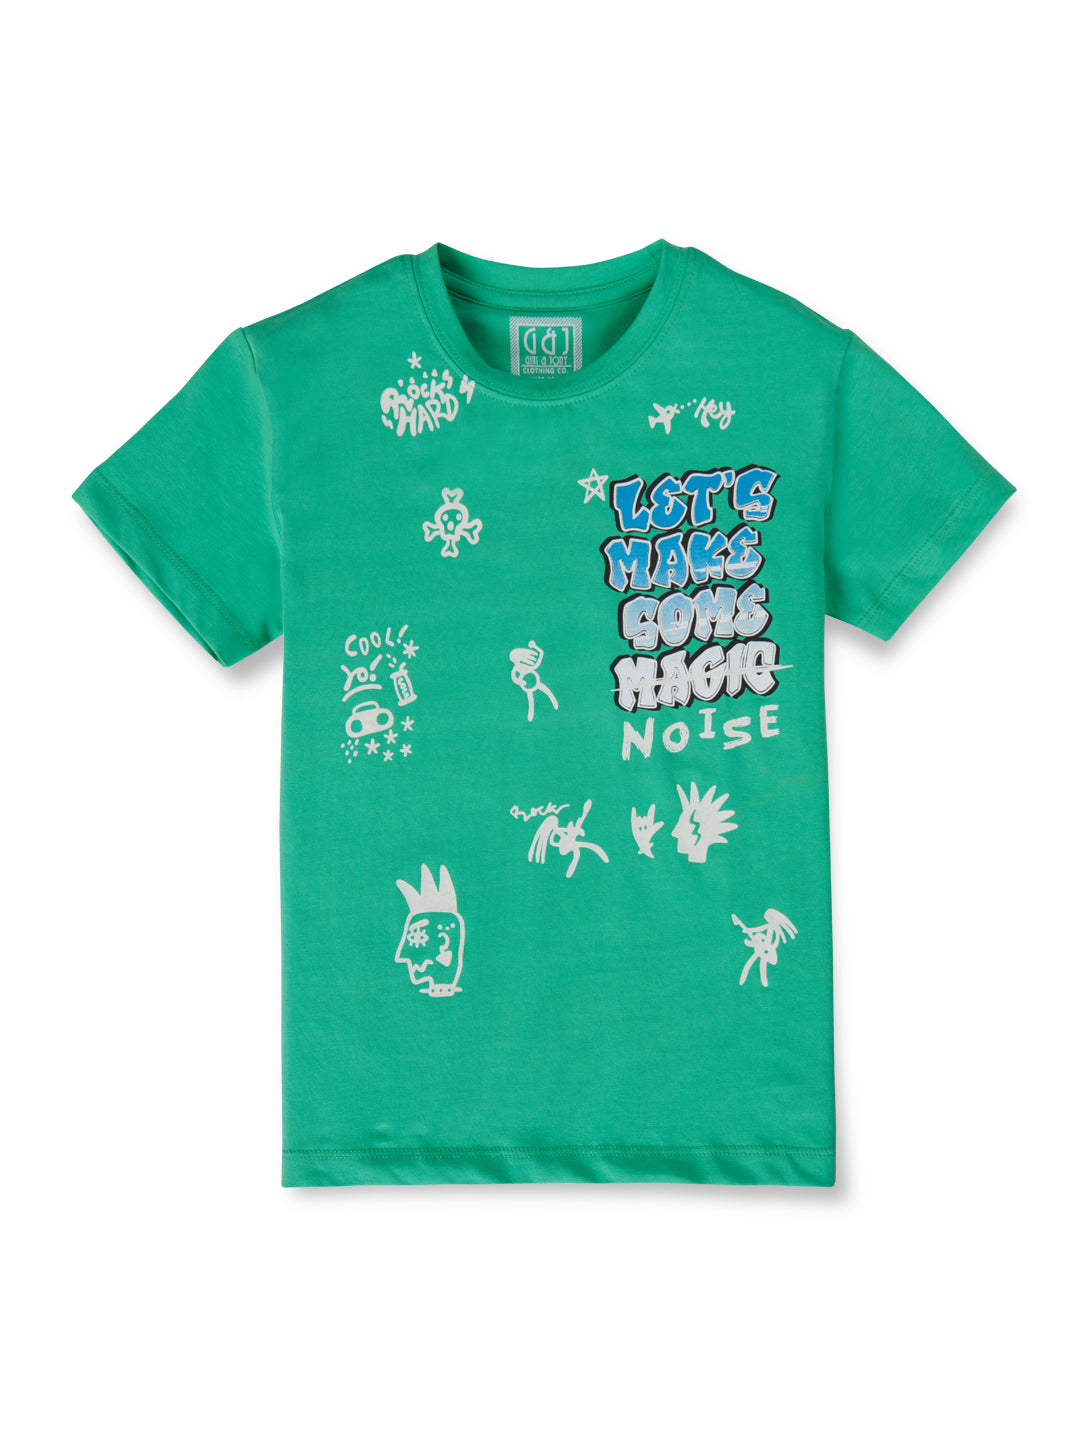 Boys Green Printed Cotton Half Sleeves T-Shirt